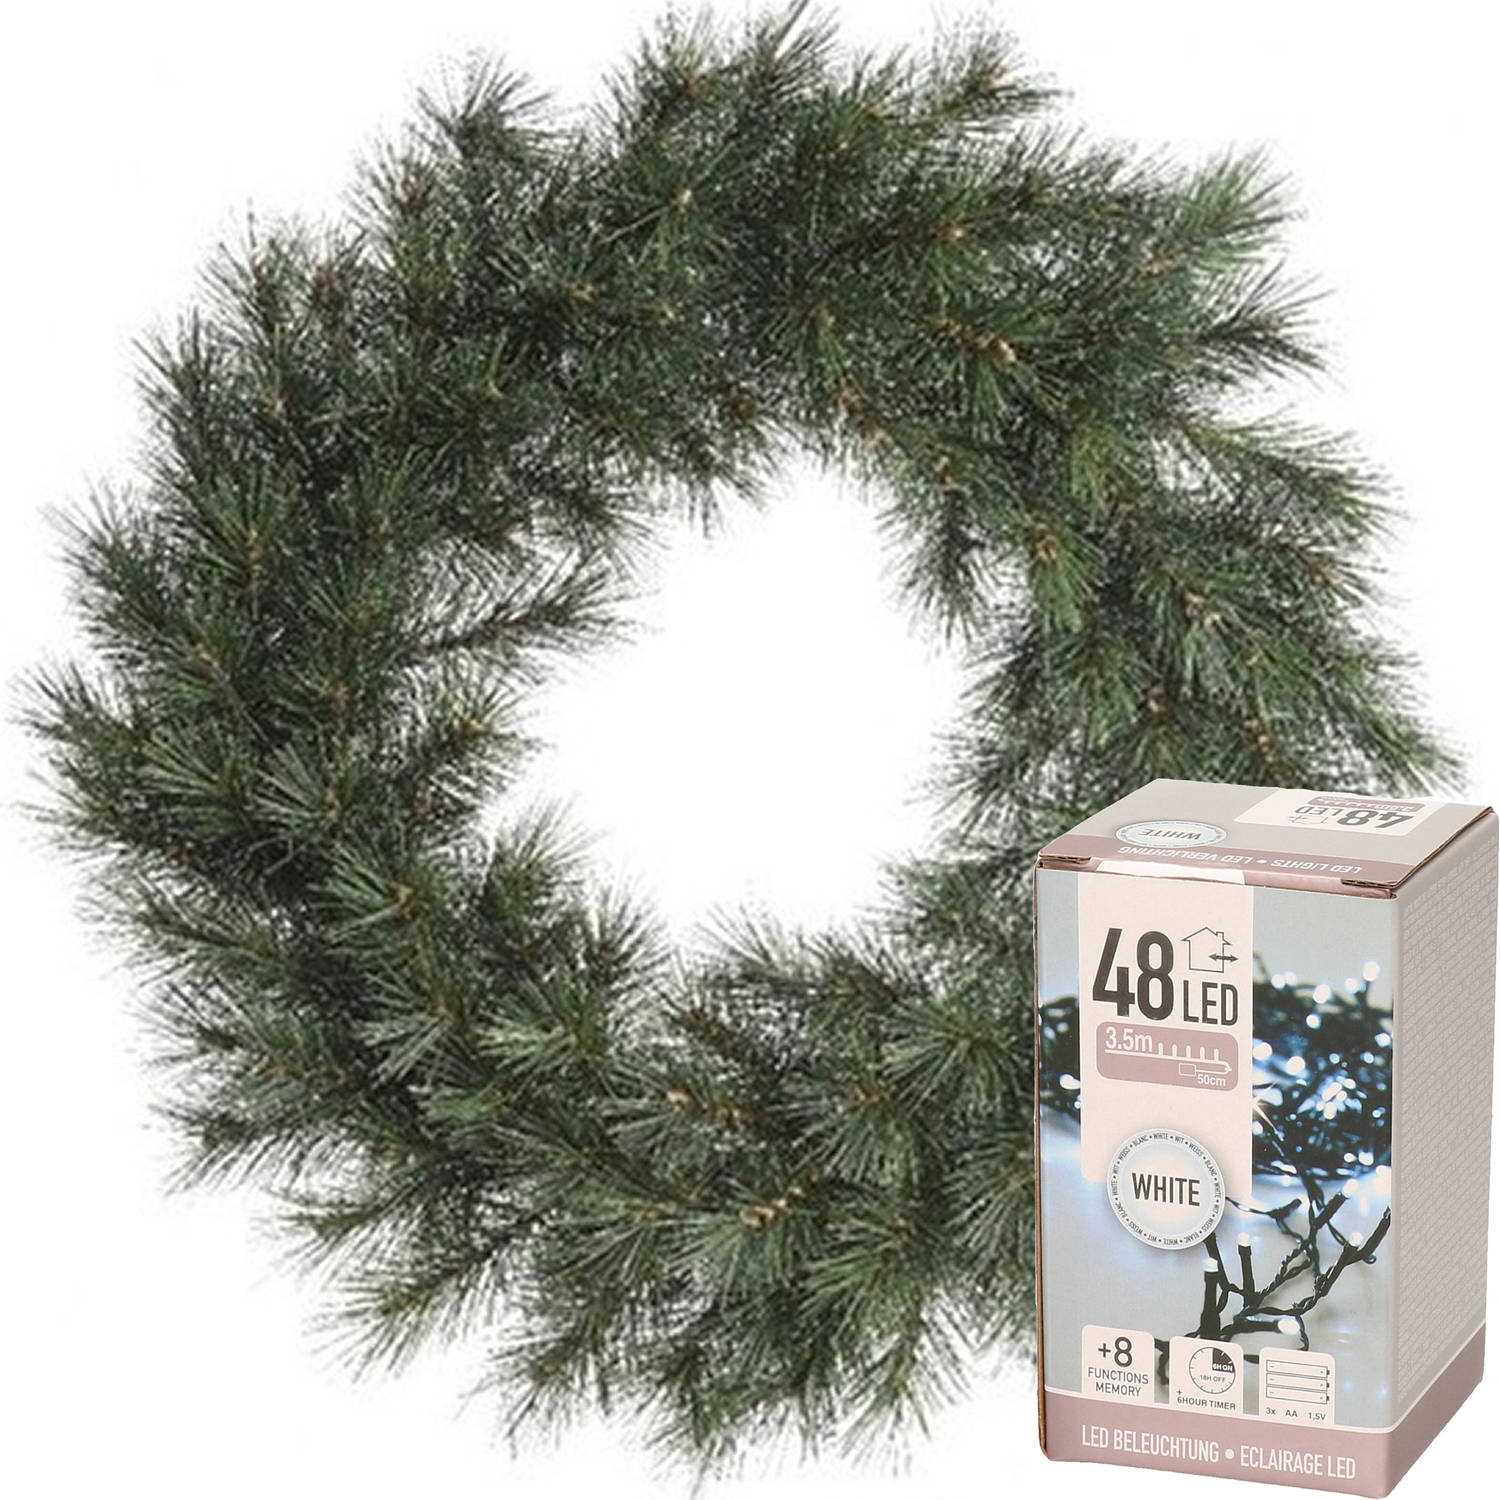 Kerstkrans Malmo 60 cm incl. verlichting helder wit 4m Kerstkransen